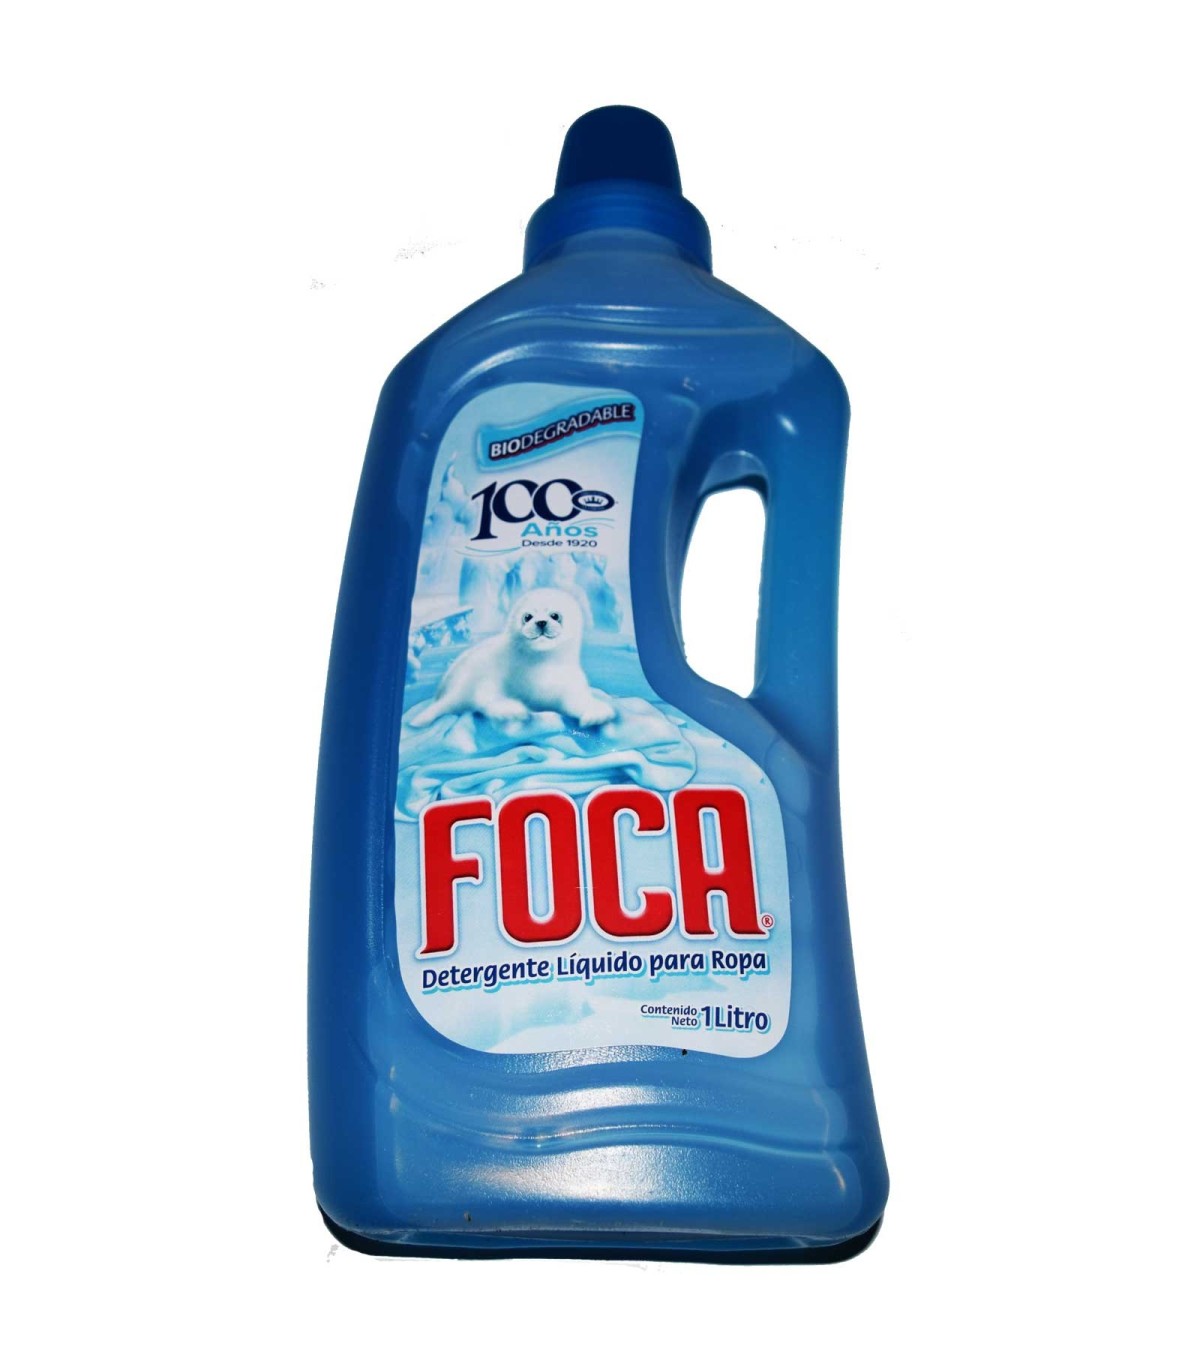 Detergente liquido Foca, para Ropa (1 litro)